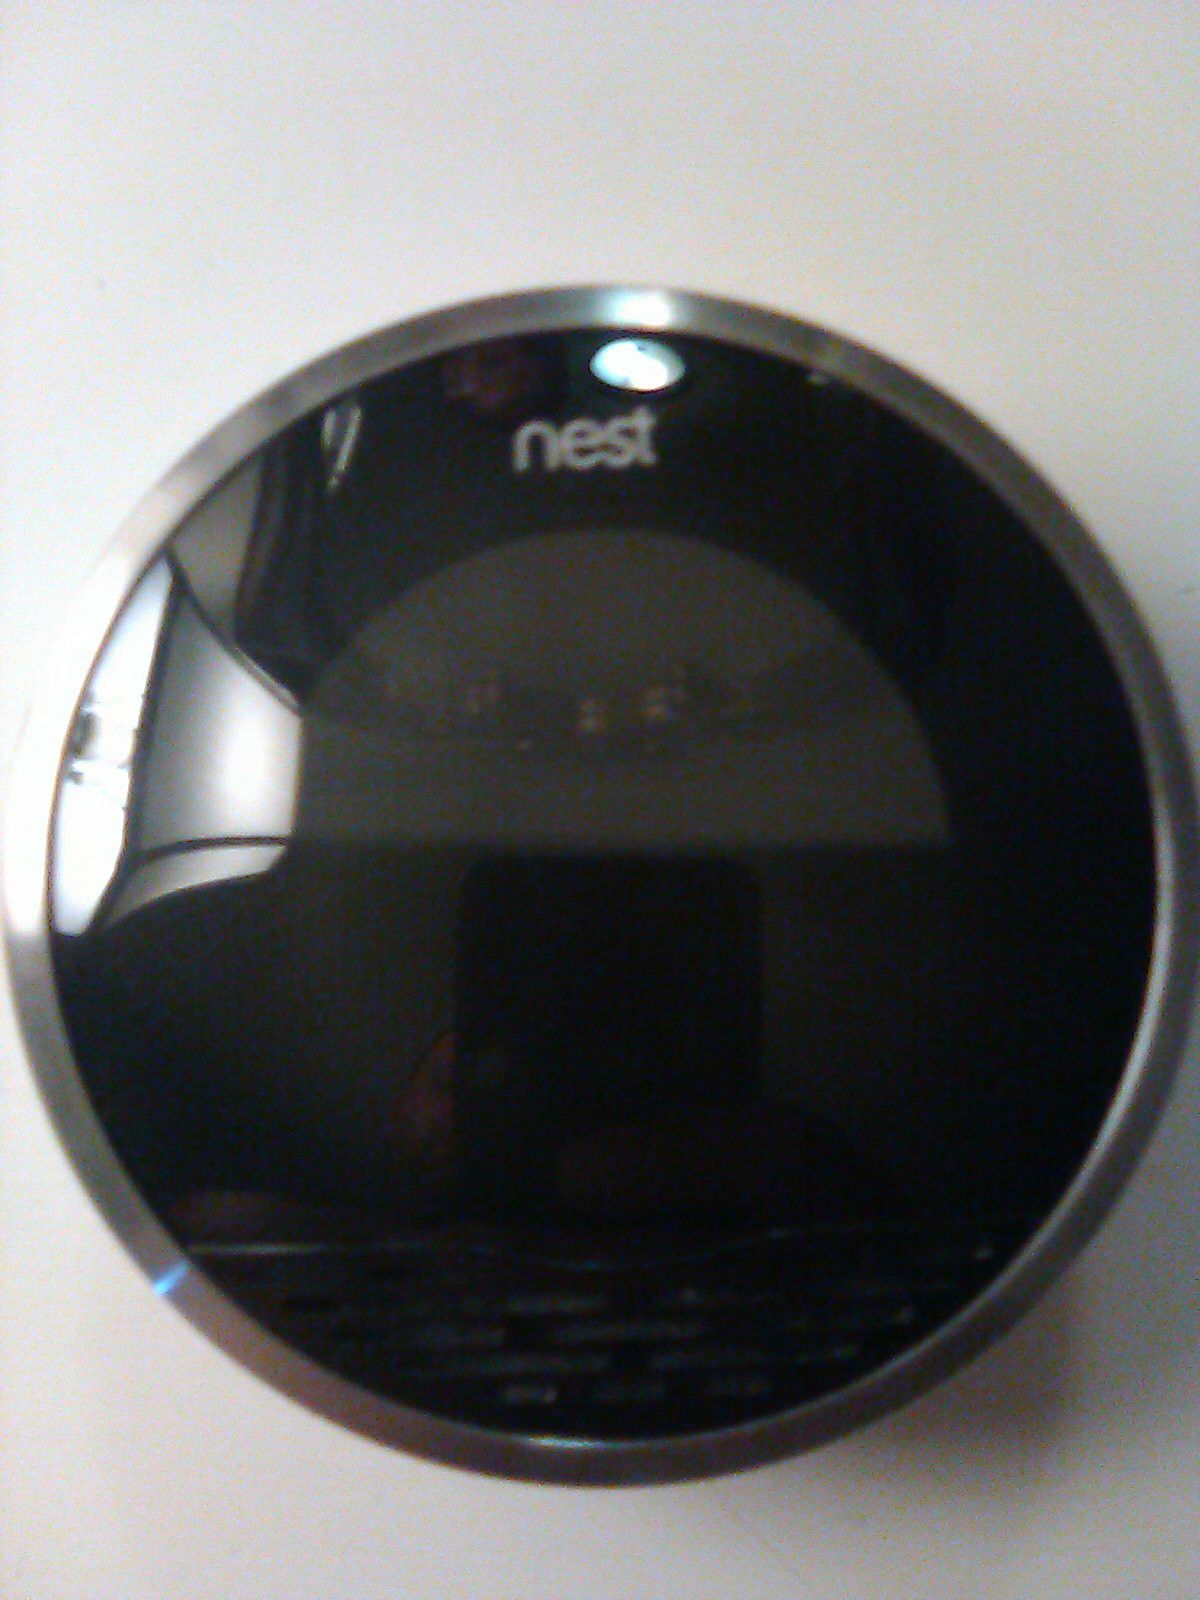 Nest WiFi Smart Thermostat